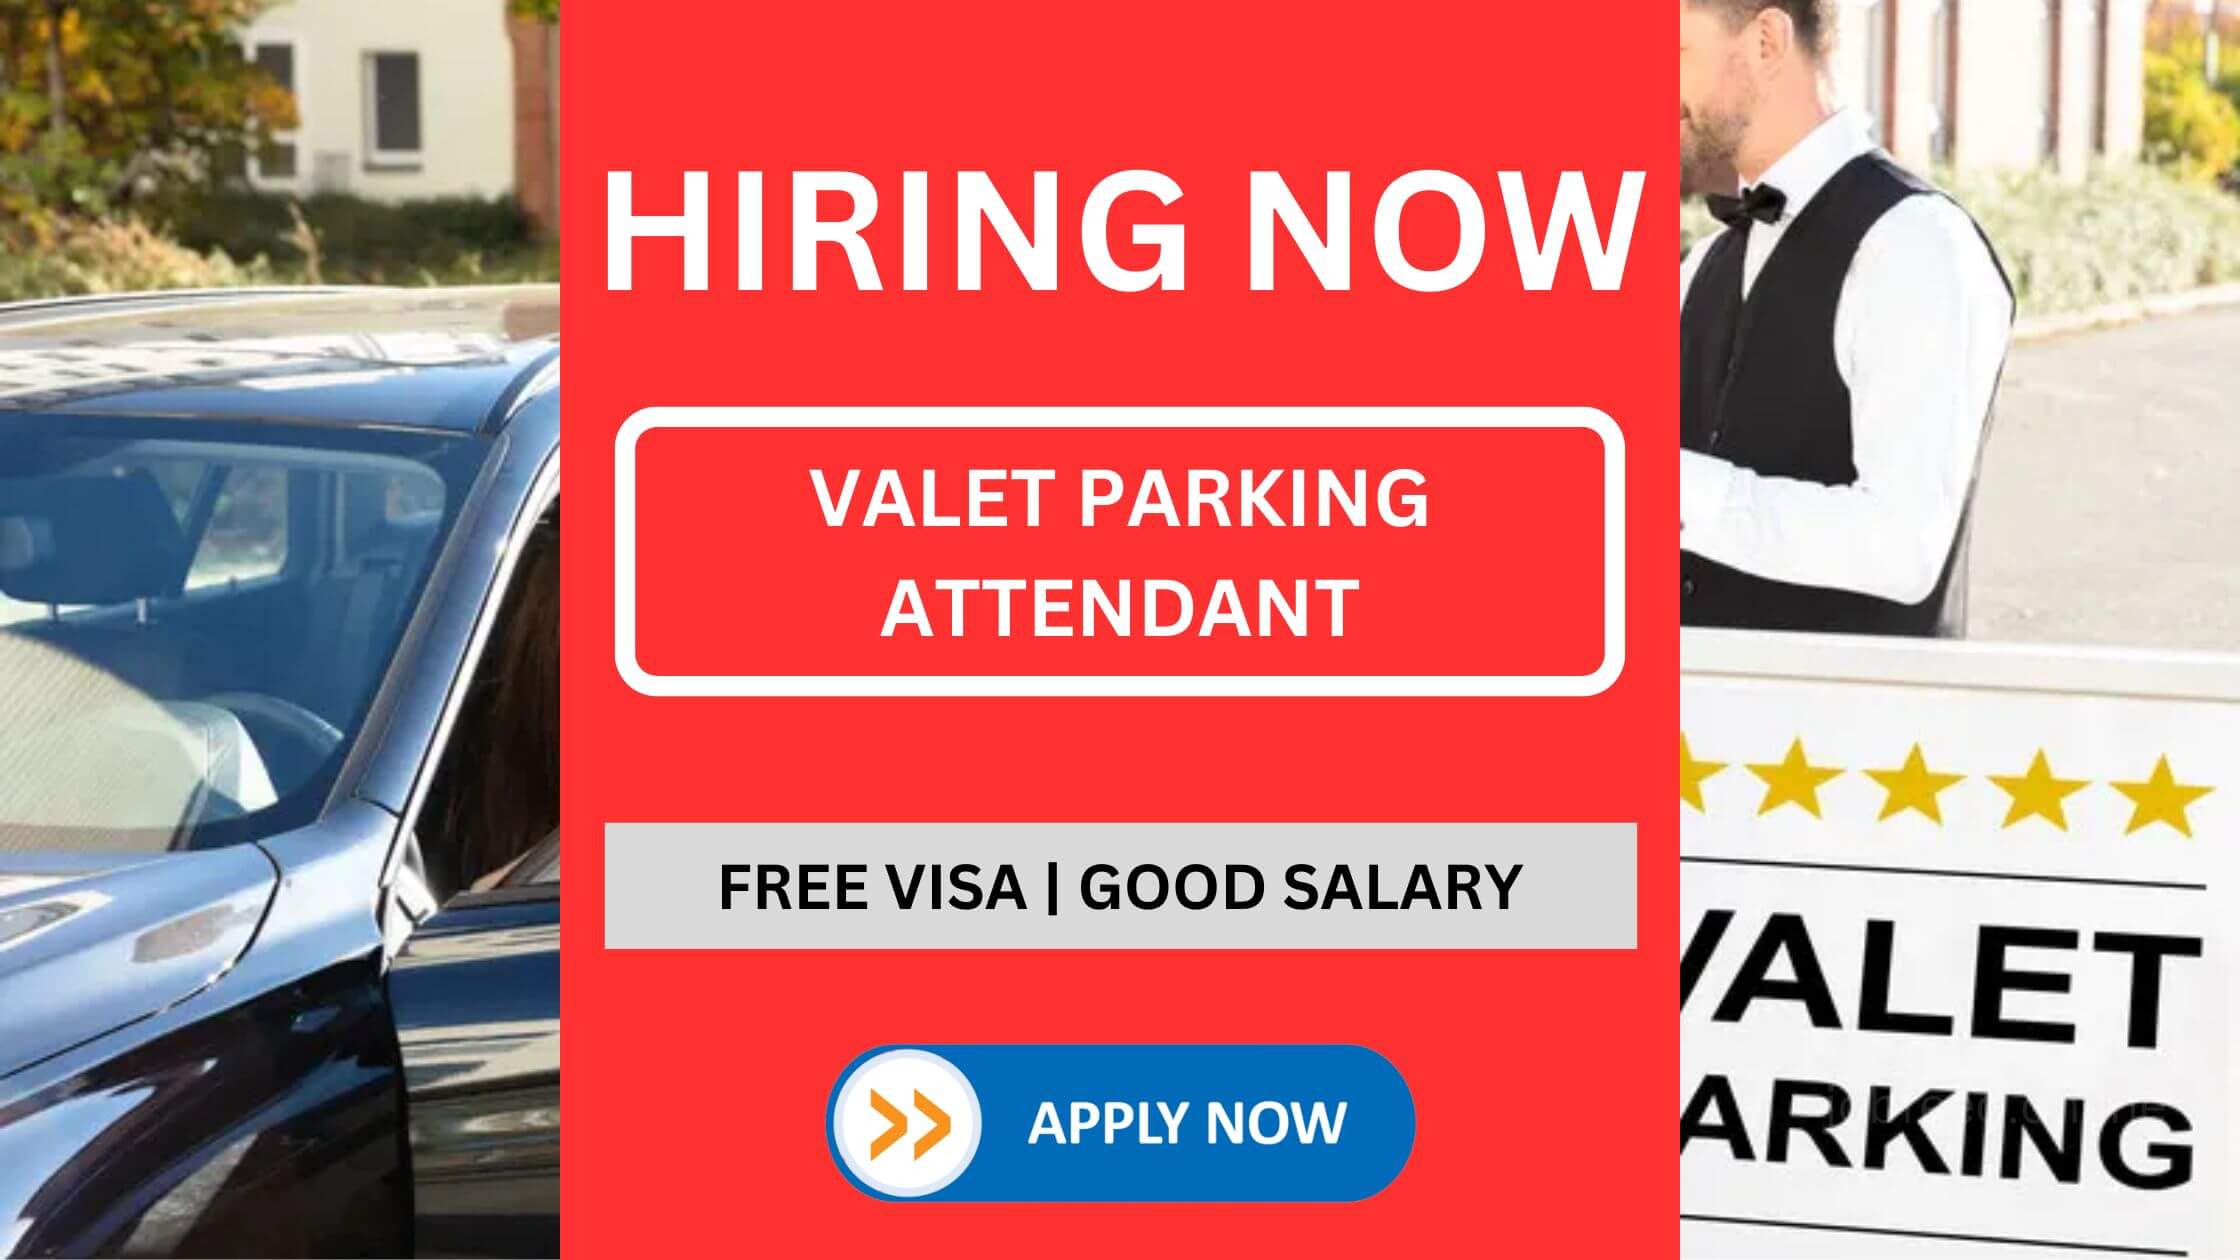 Valet Parking Attendant